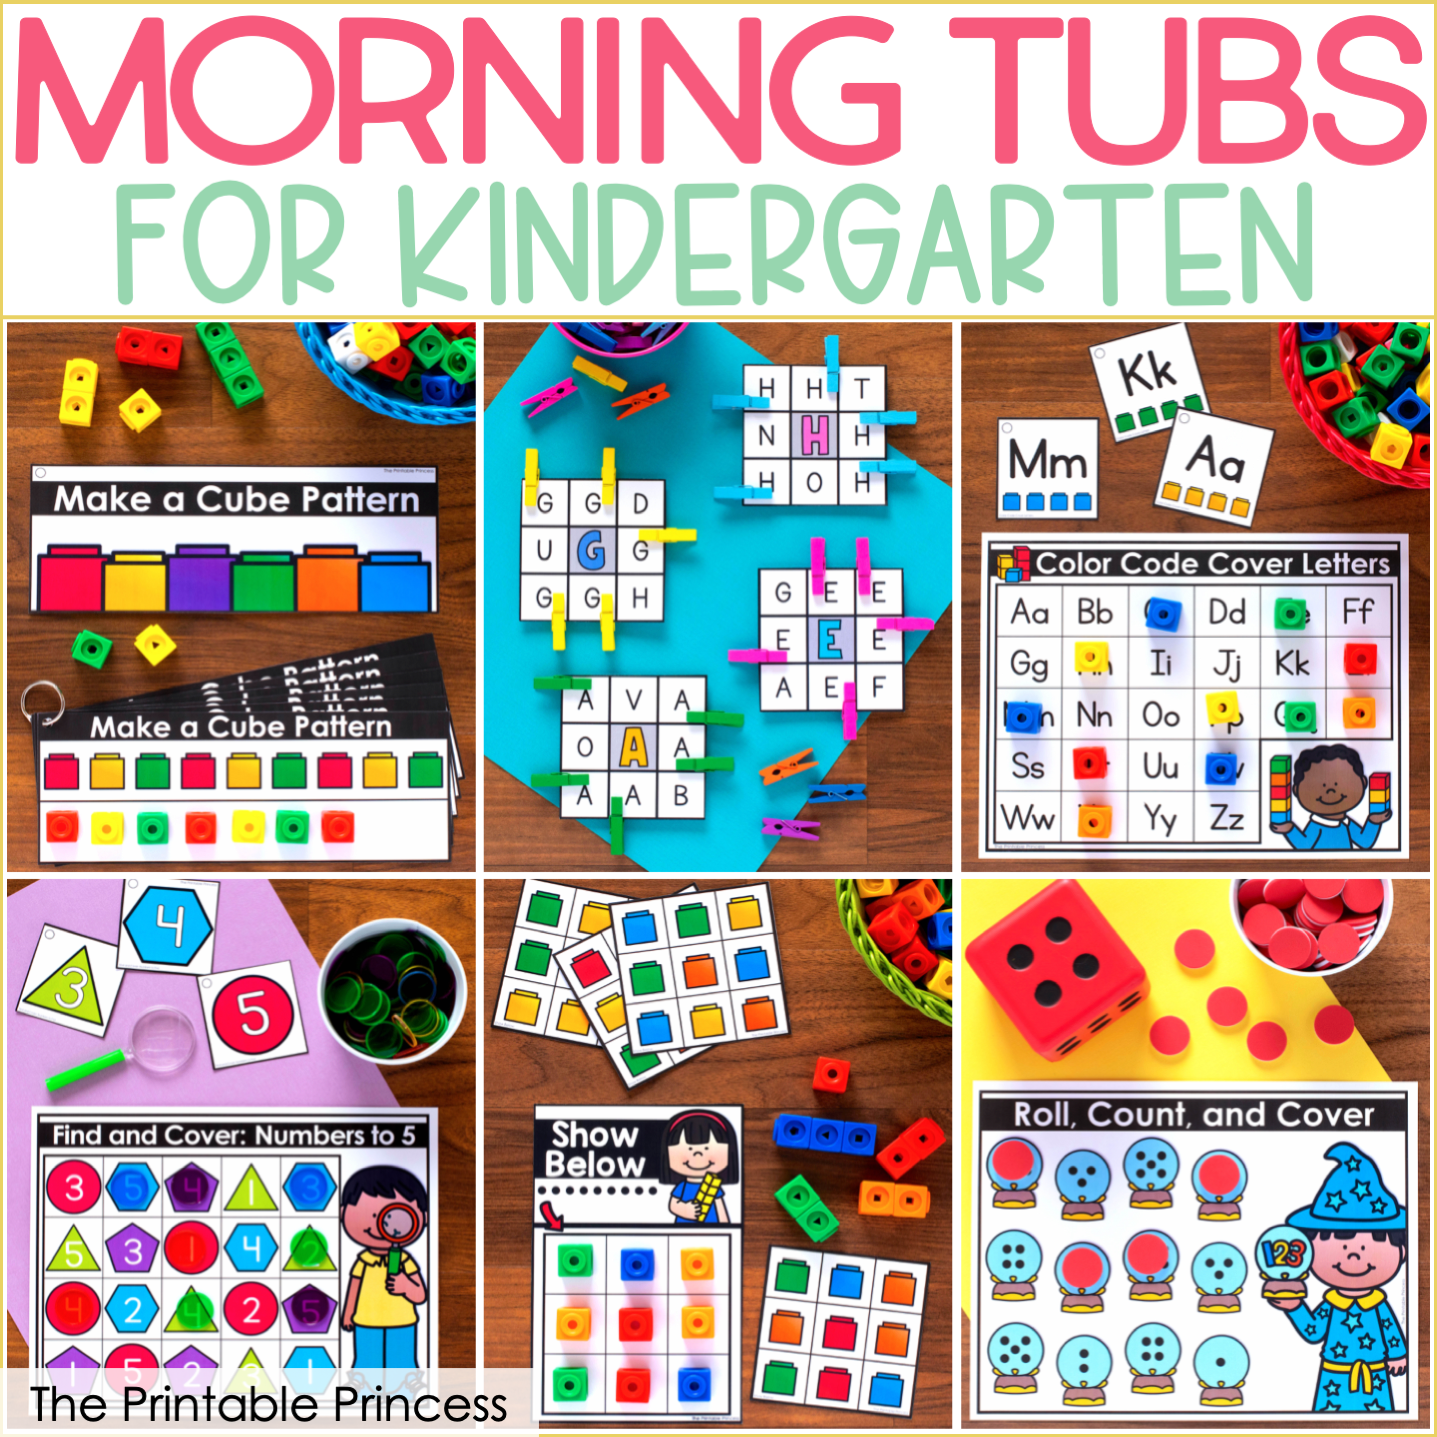 Kindergarten Morning Tubs